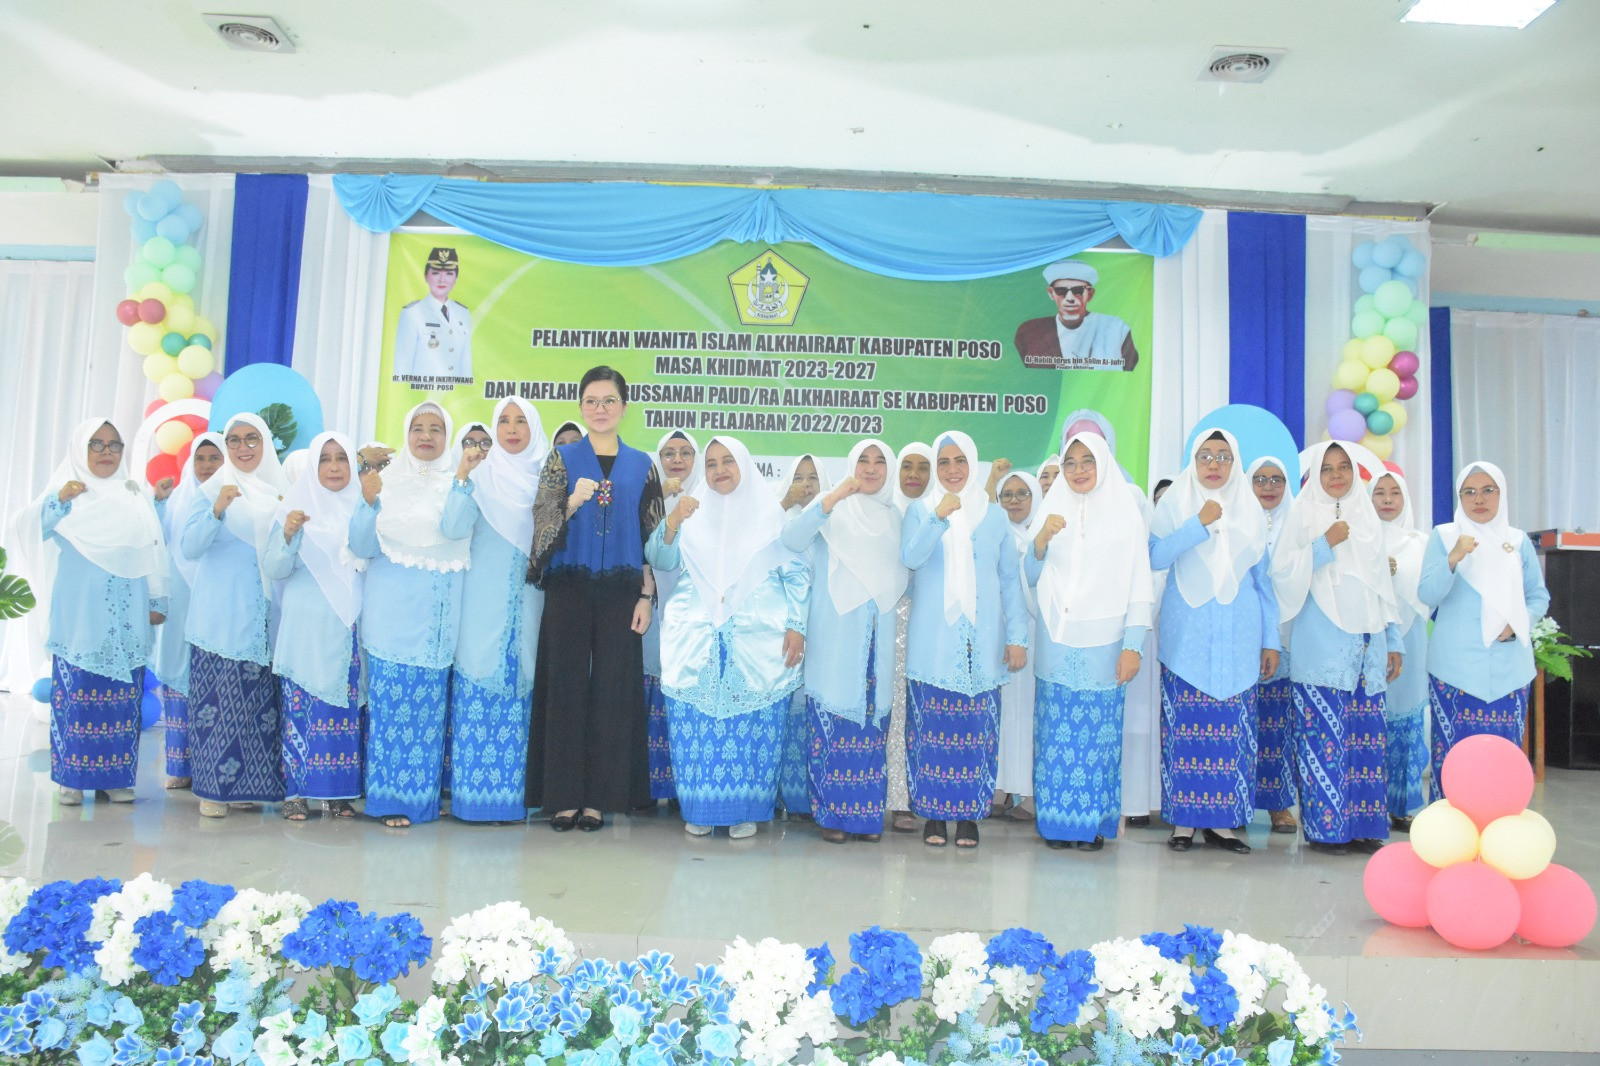 Bupati Poso Hadiri Acara Pengukuhan Pengurus Daerah Wanita Islam Alkhairaat Kabupaten Poso dan Peray